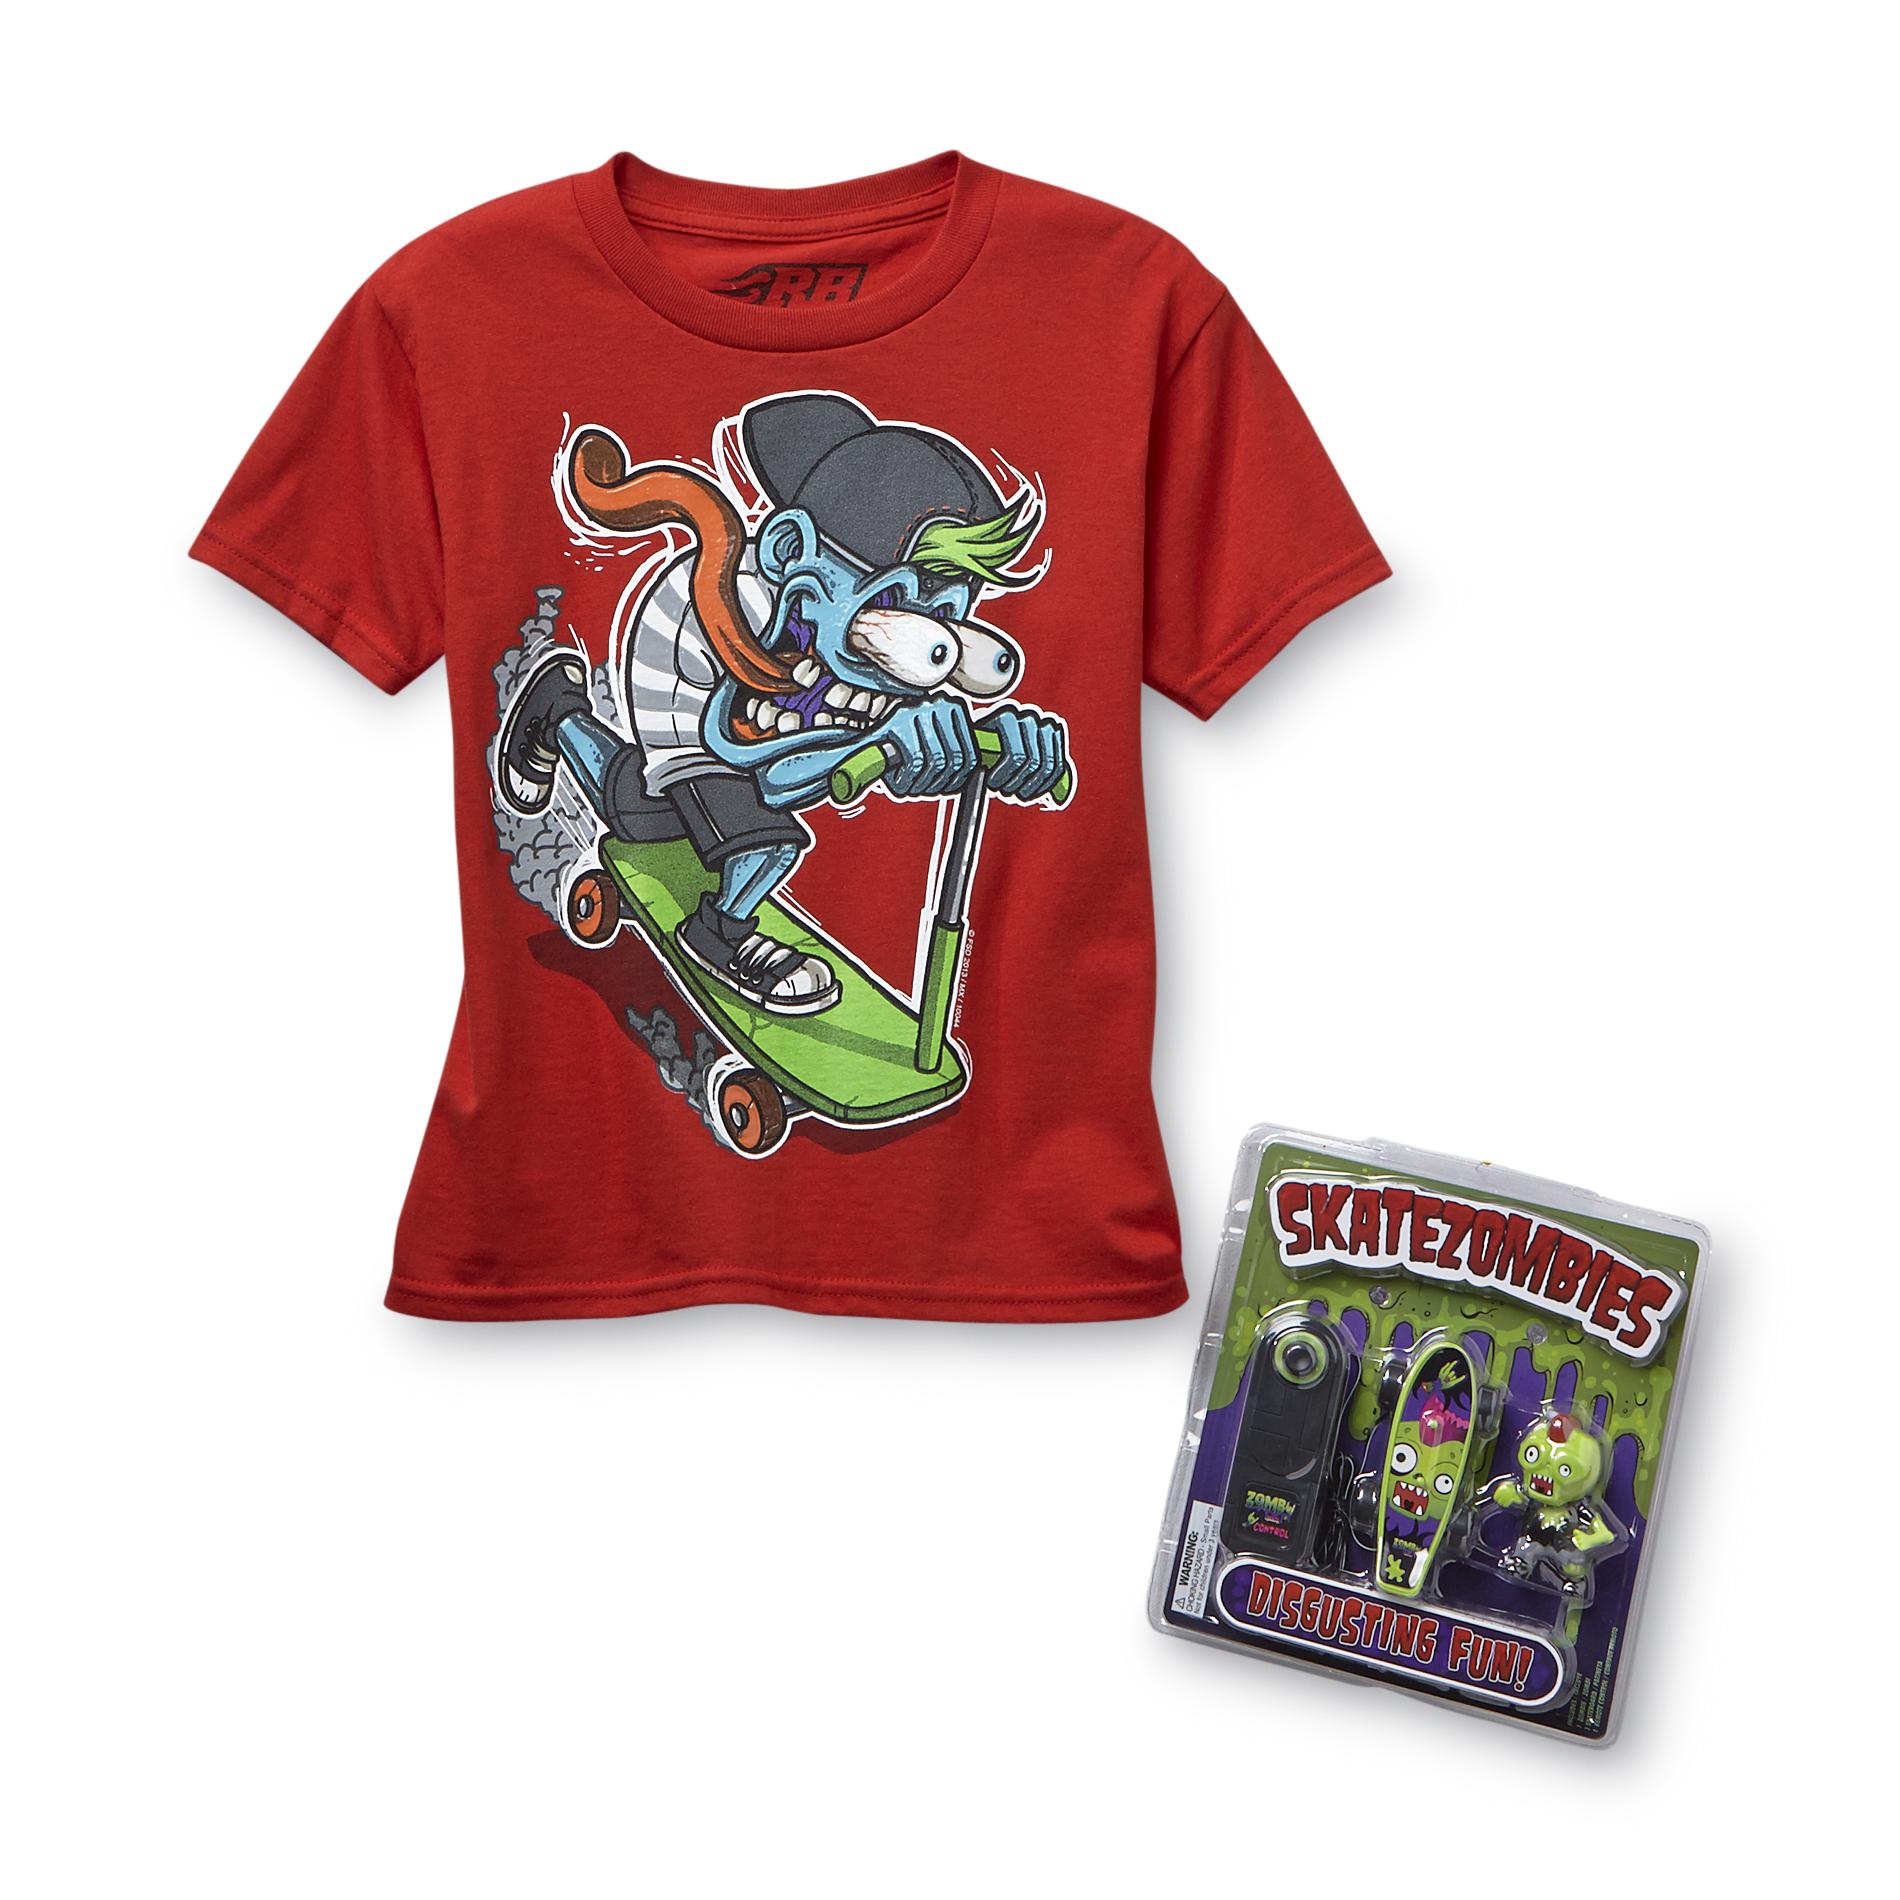 Rudeboyz Boy's Graphic T-Shirt & Remote Control Toy Skateboard - Zombies